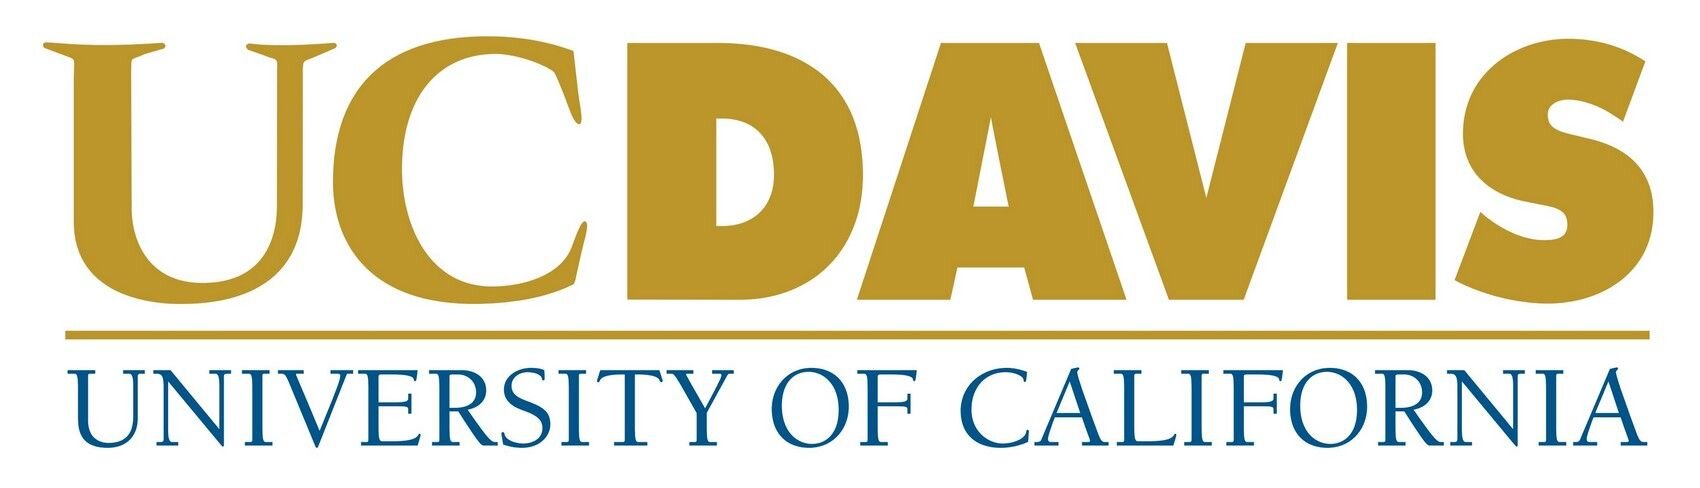 University of California Davis.jpg